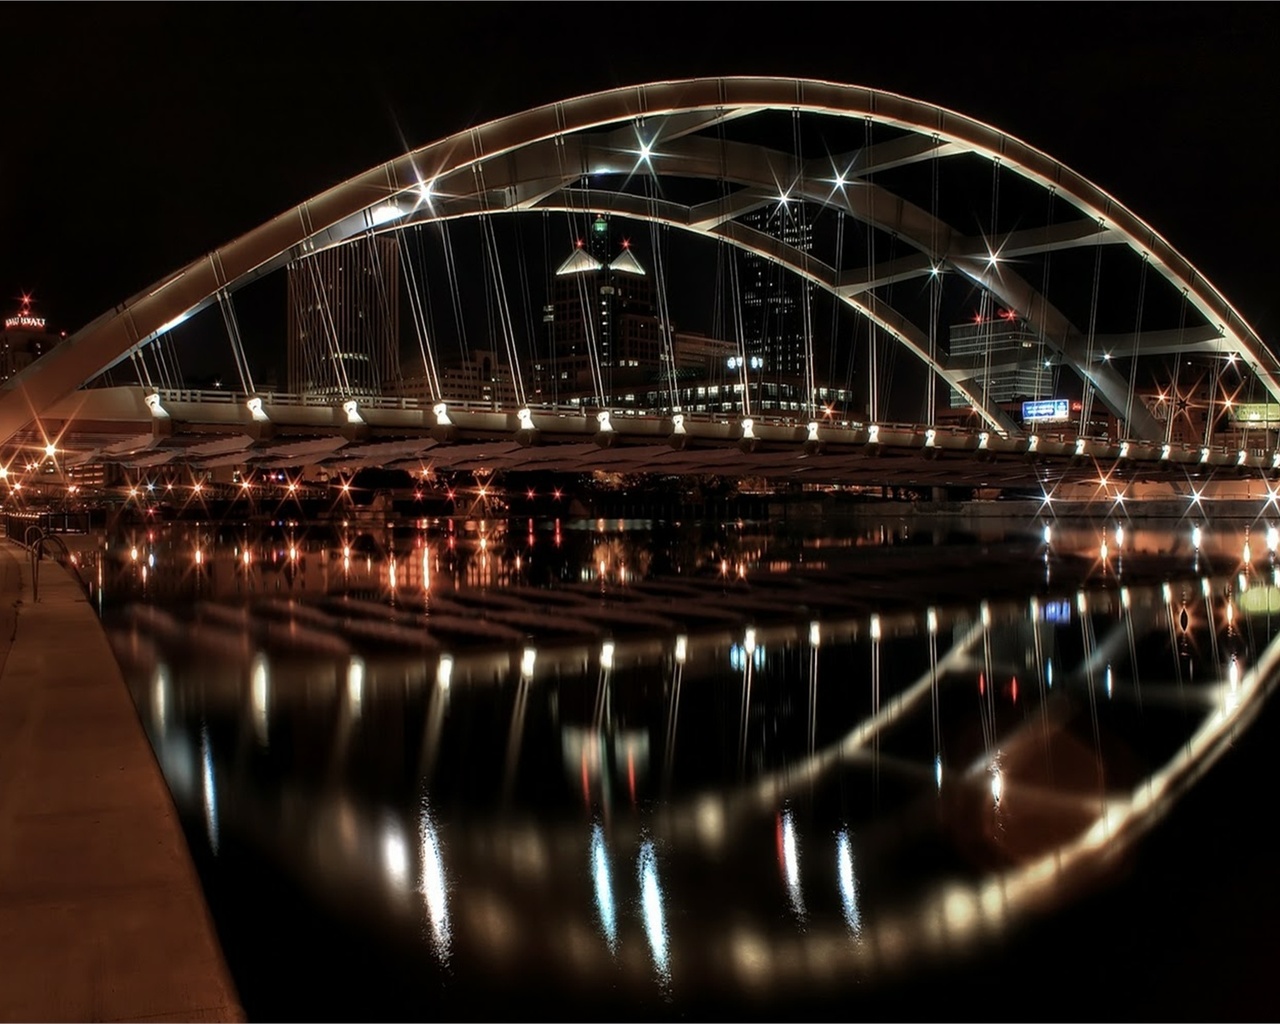 lights, bridge, water, building, night